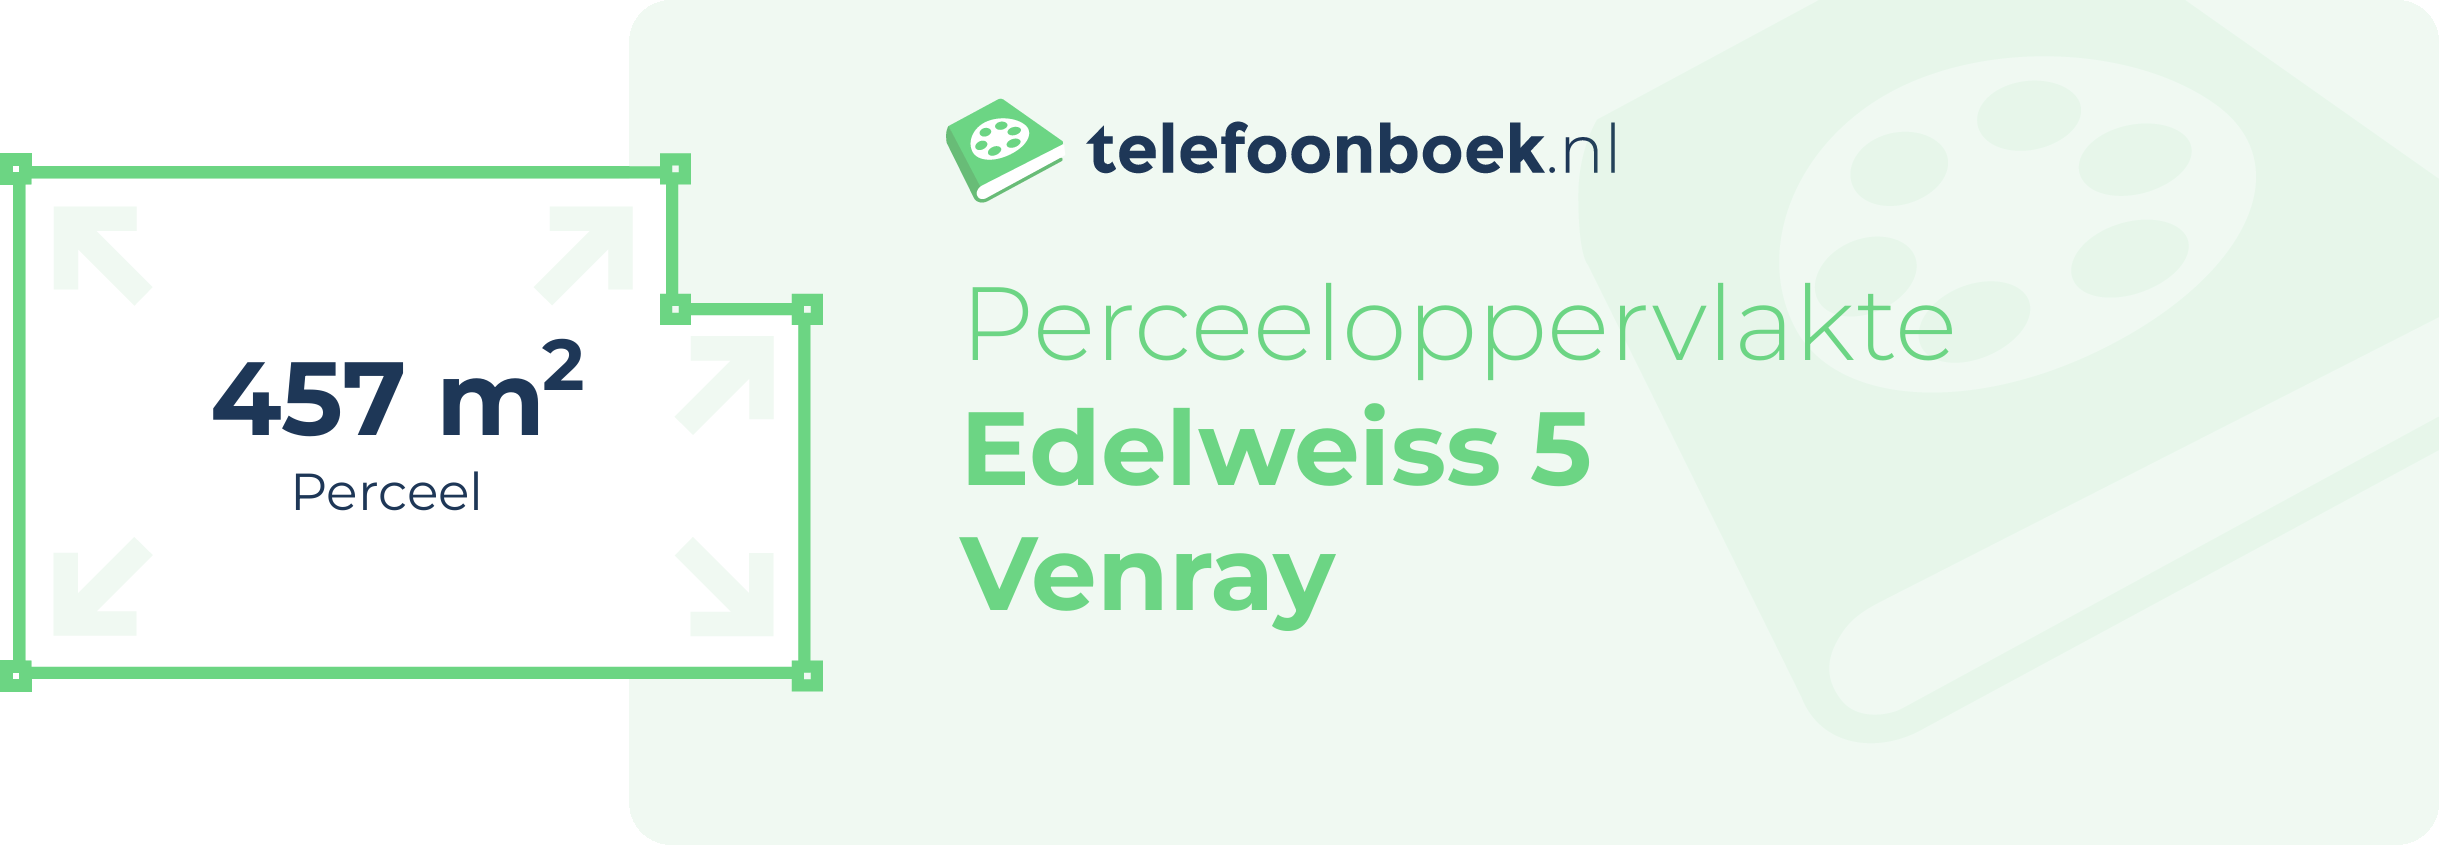 Perceeloppervlakte Edelweiss 5 Venray